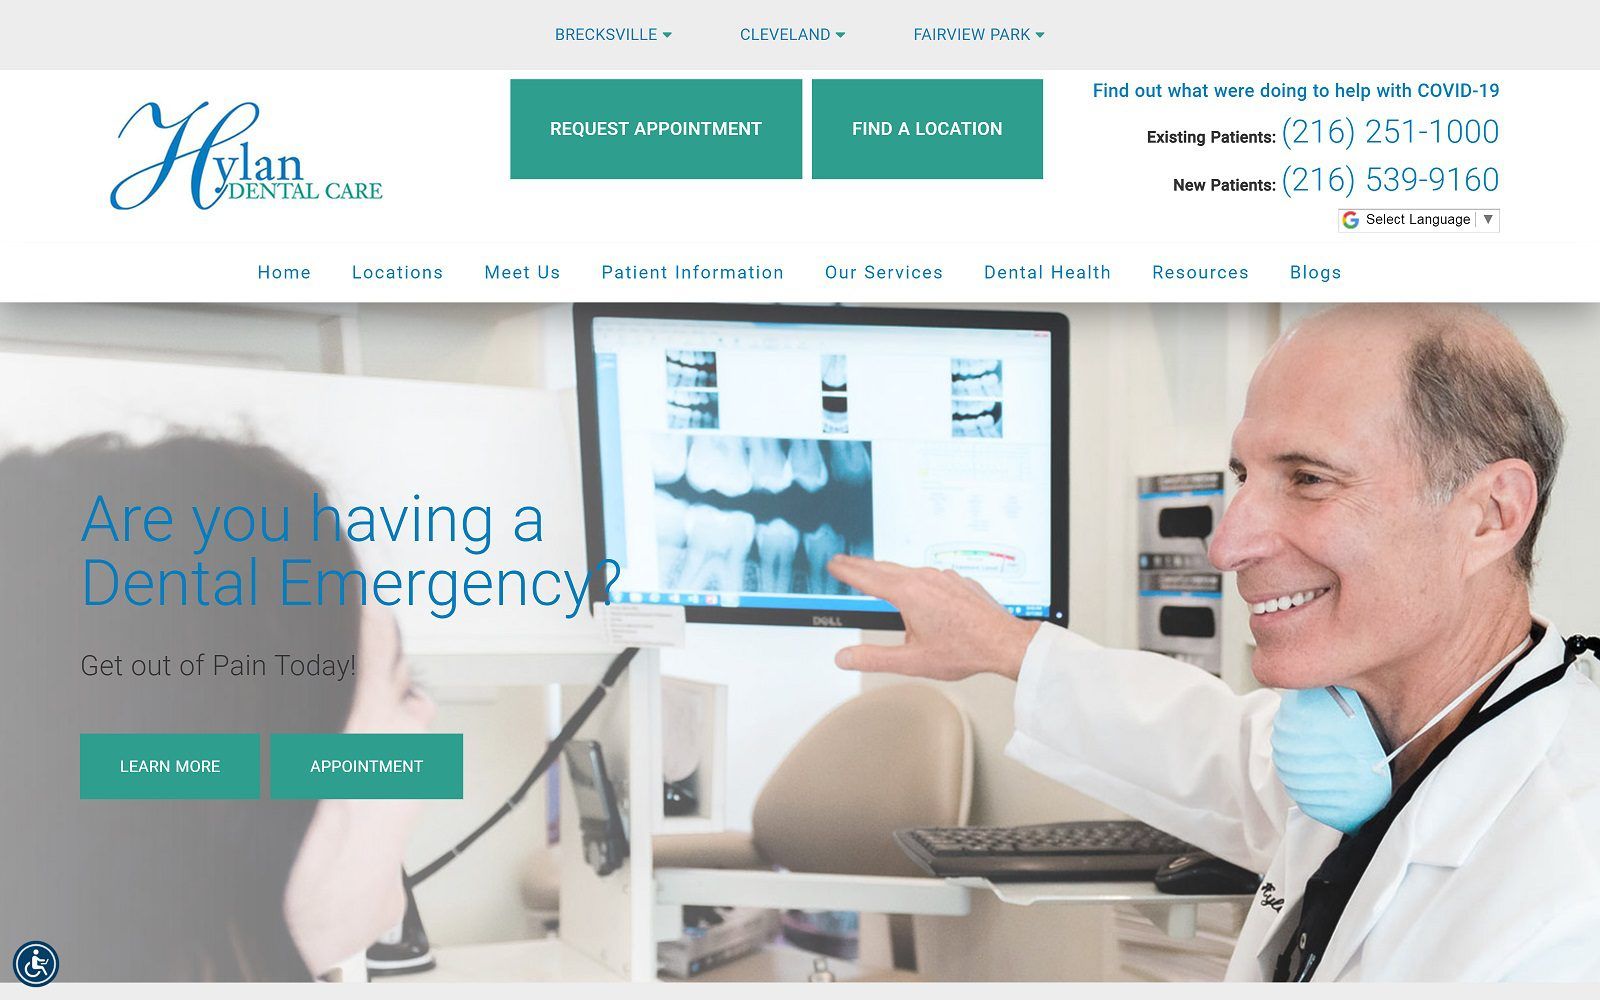 The screenshot of hylan dental care - cleveland website